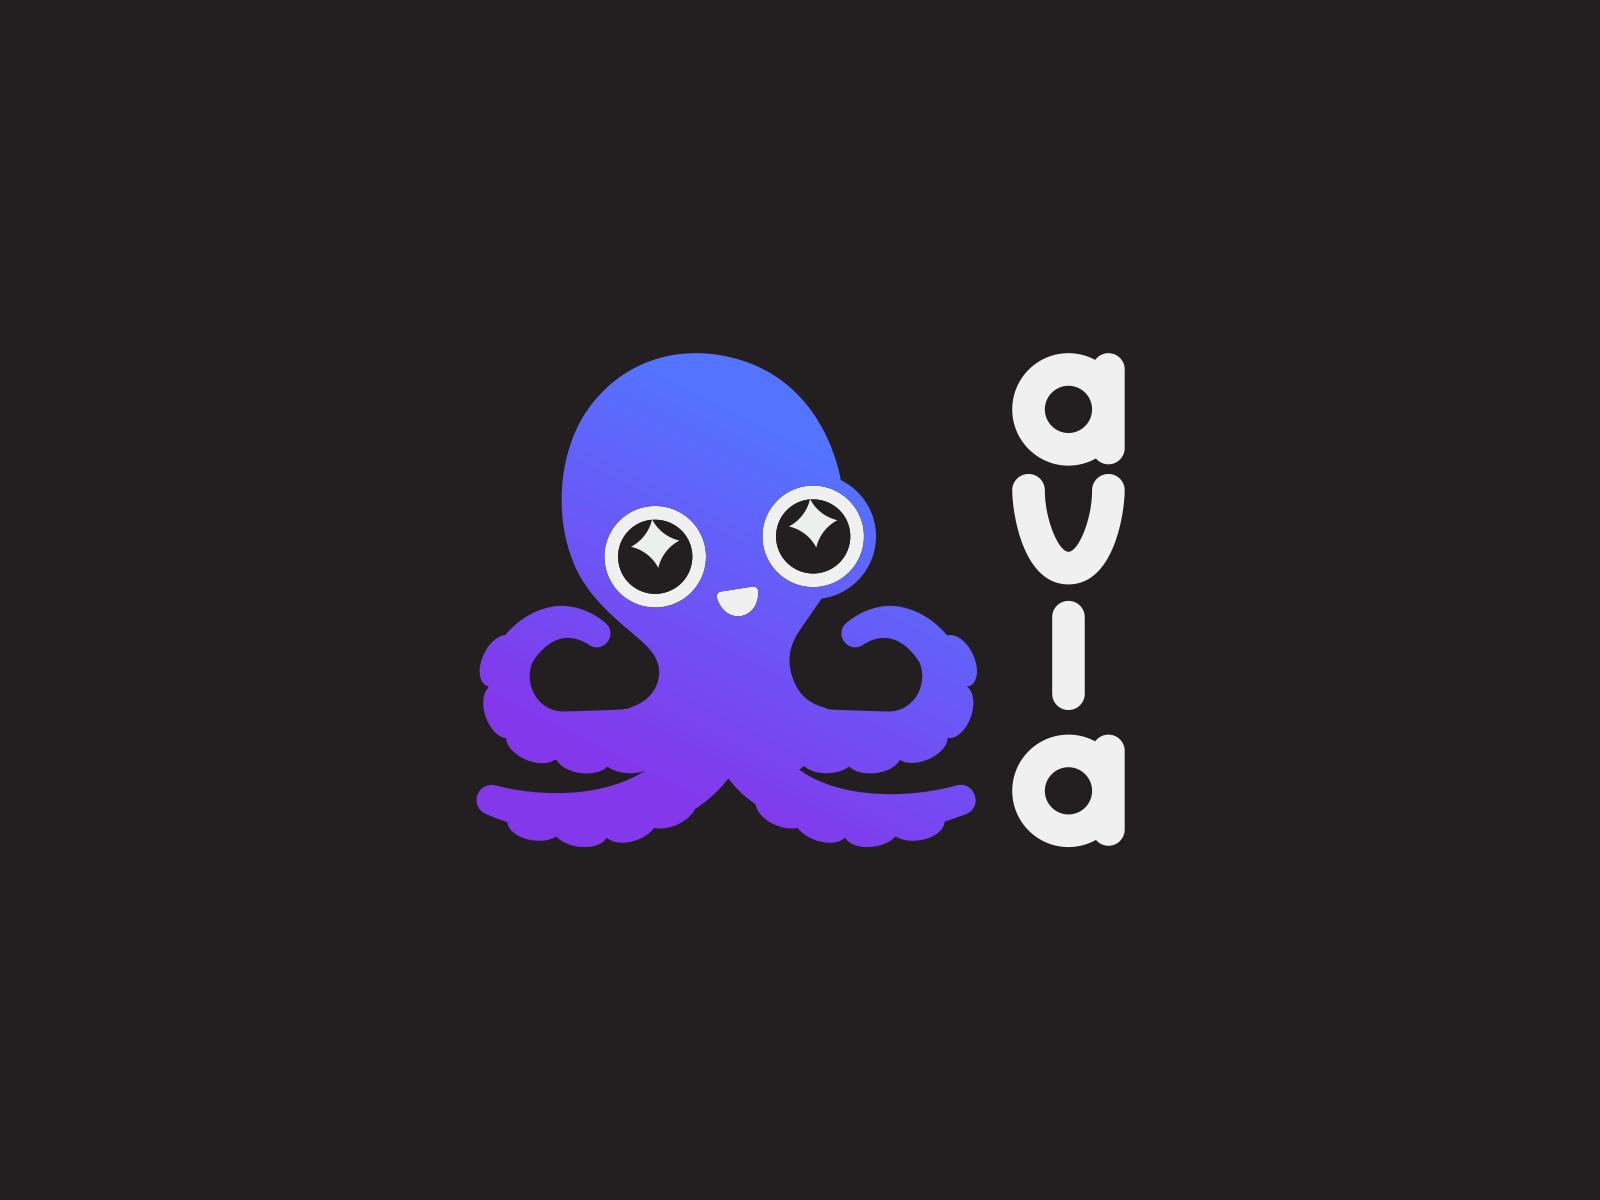 AVIA Games – Mascot logo option by Peter Giuffria PGCREATES on